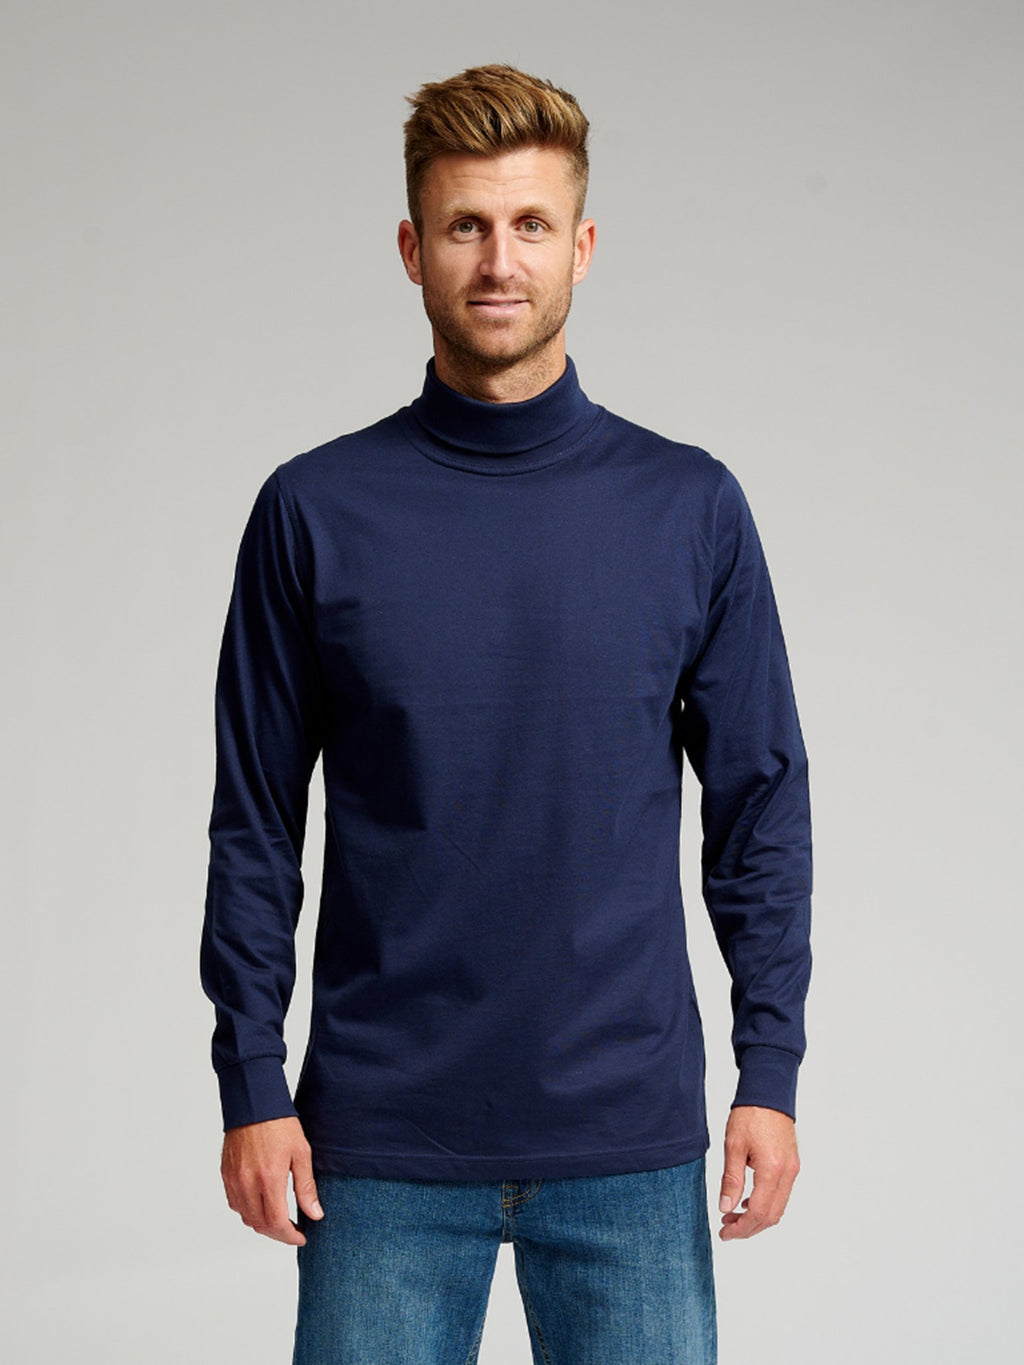 Roll collar sweater - Navy